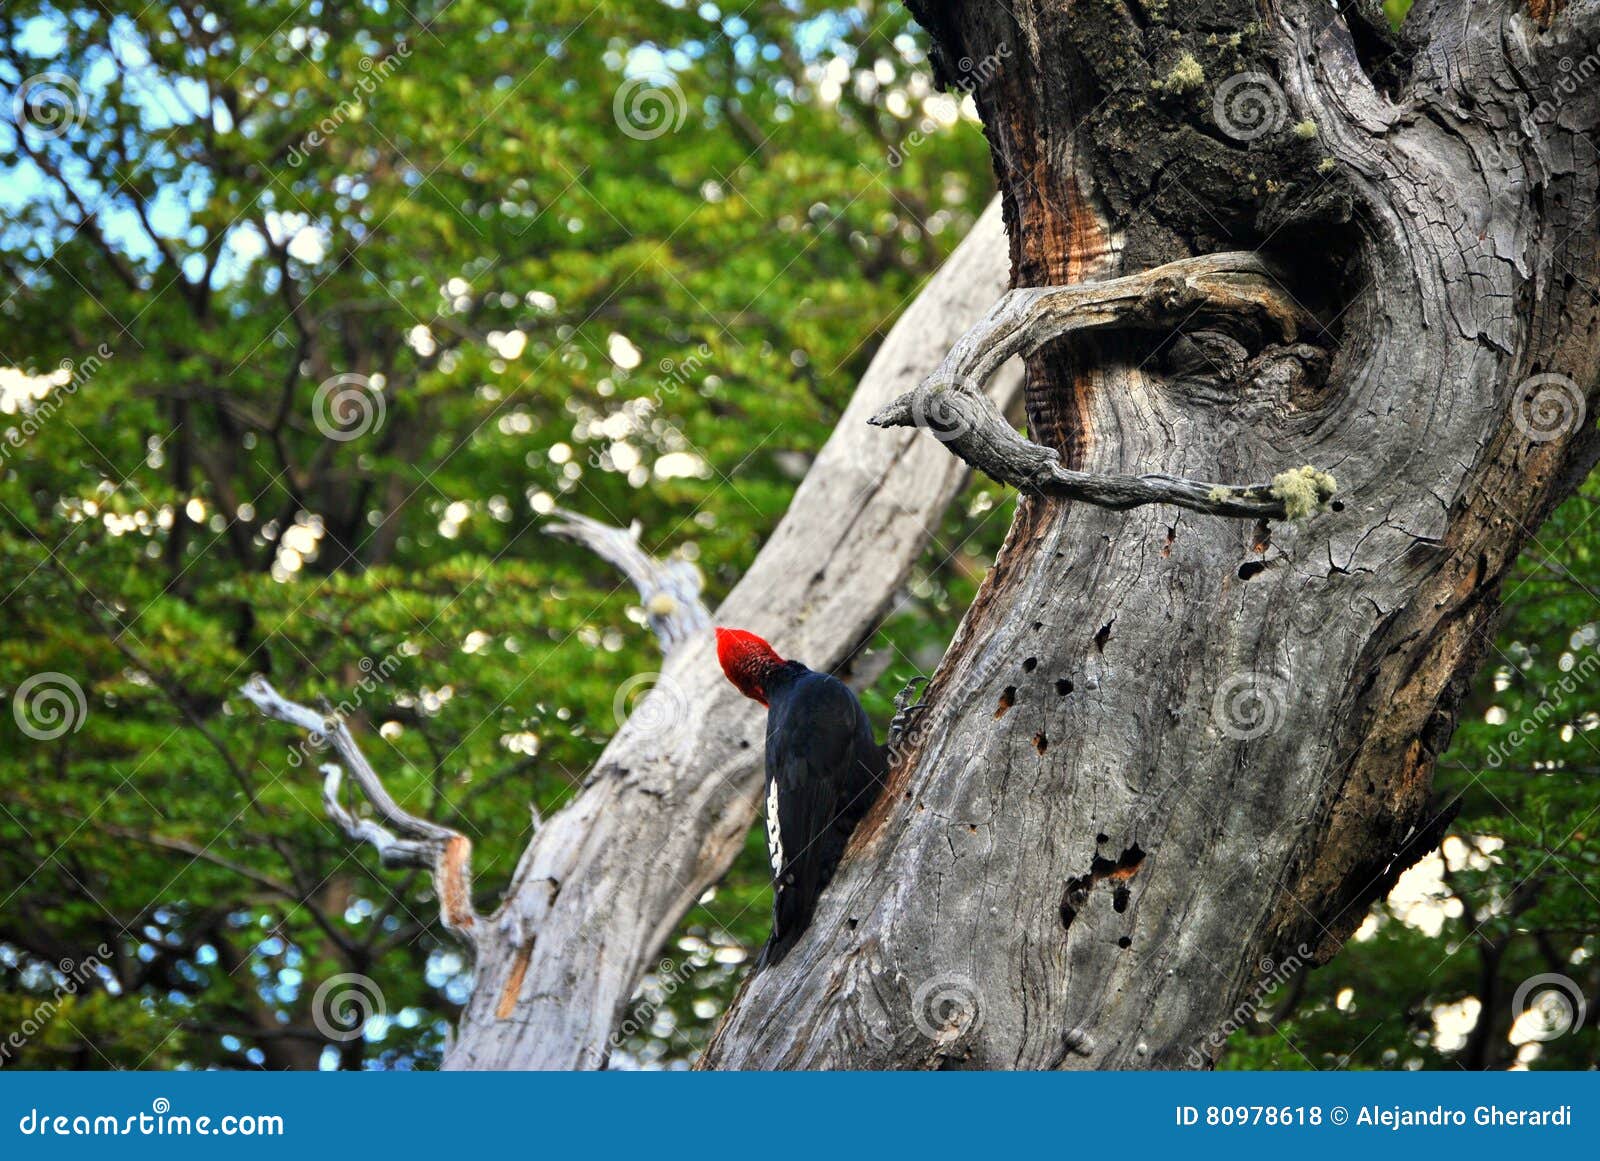 woodpecker looking away